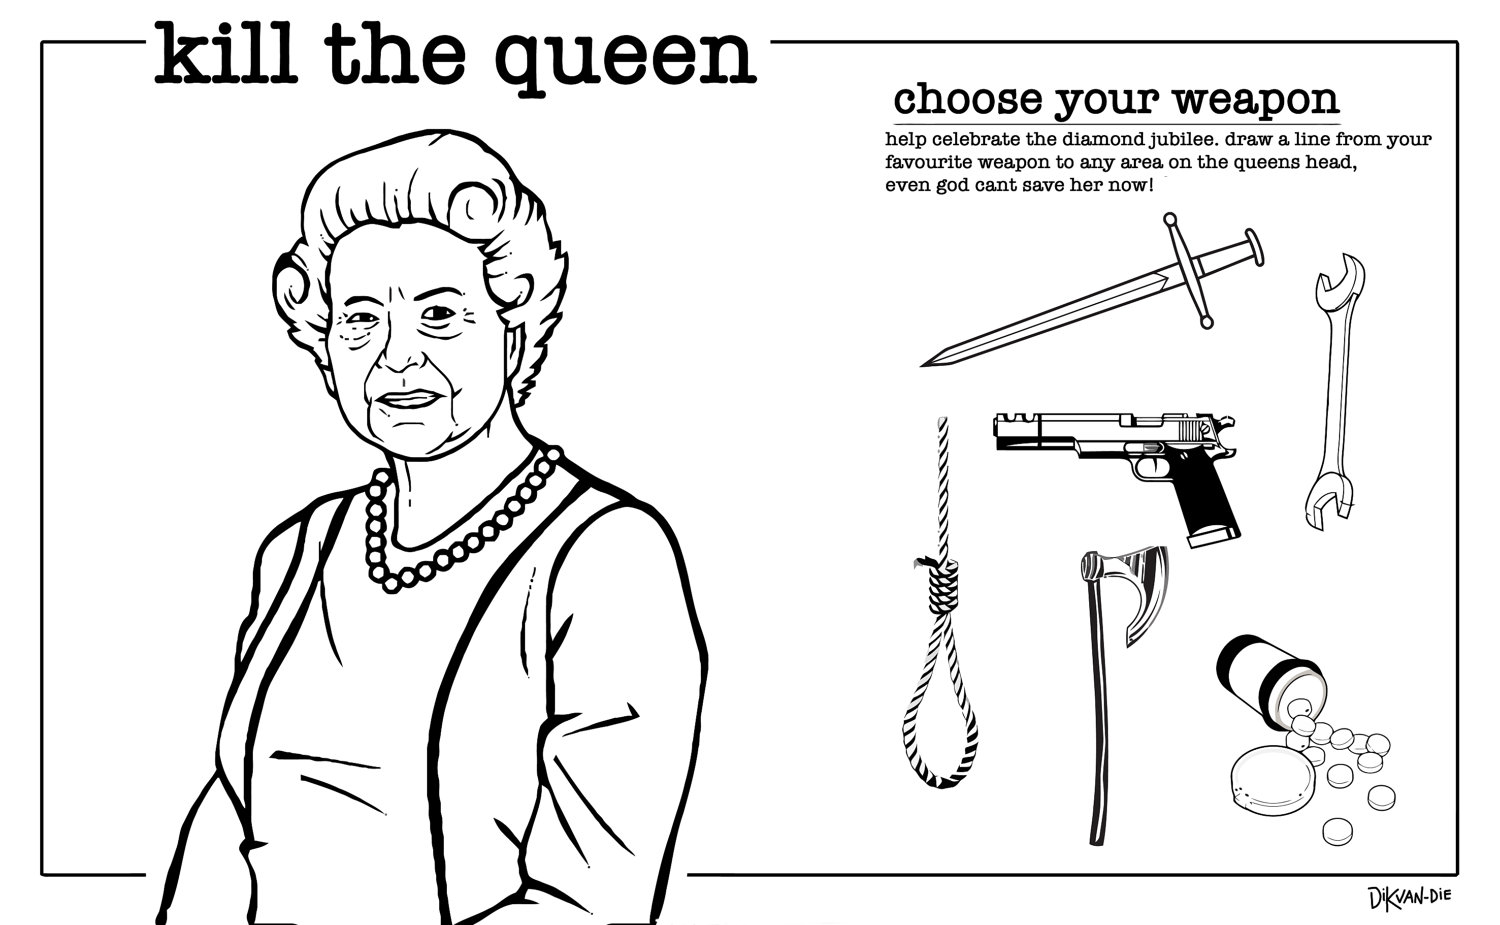 kill the queen.jpg